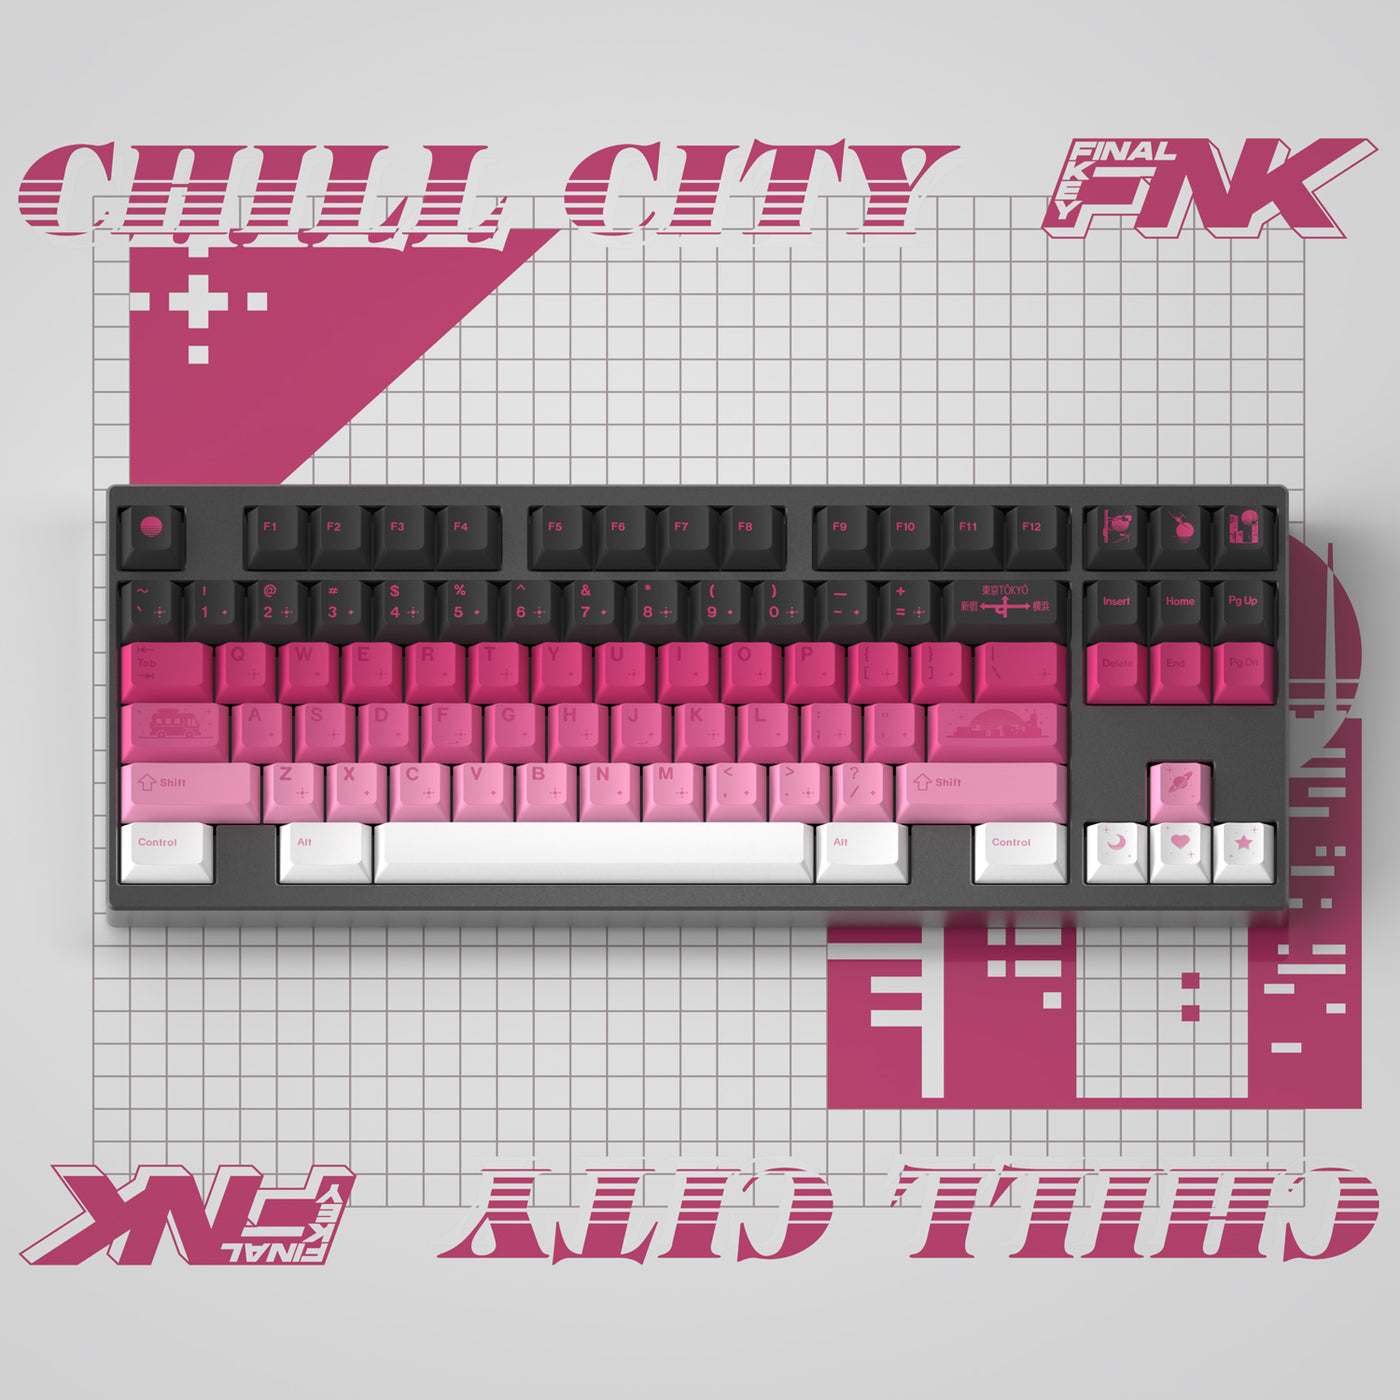 Finalkey Chill City Keycaps Set